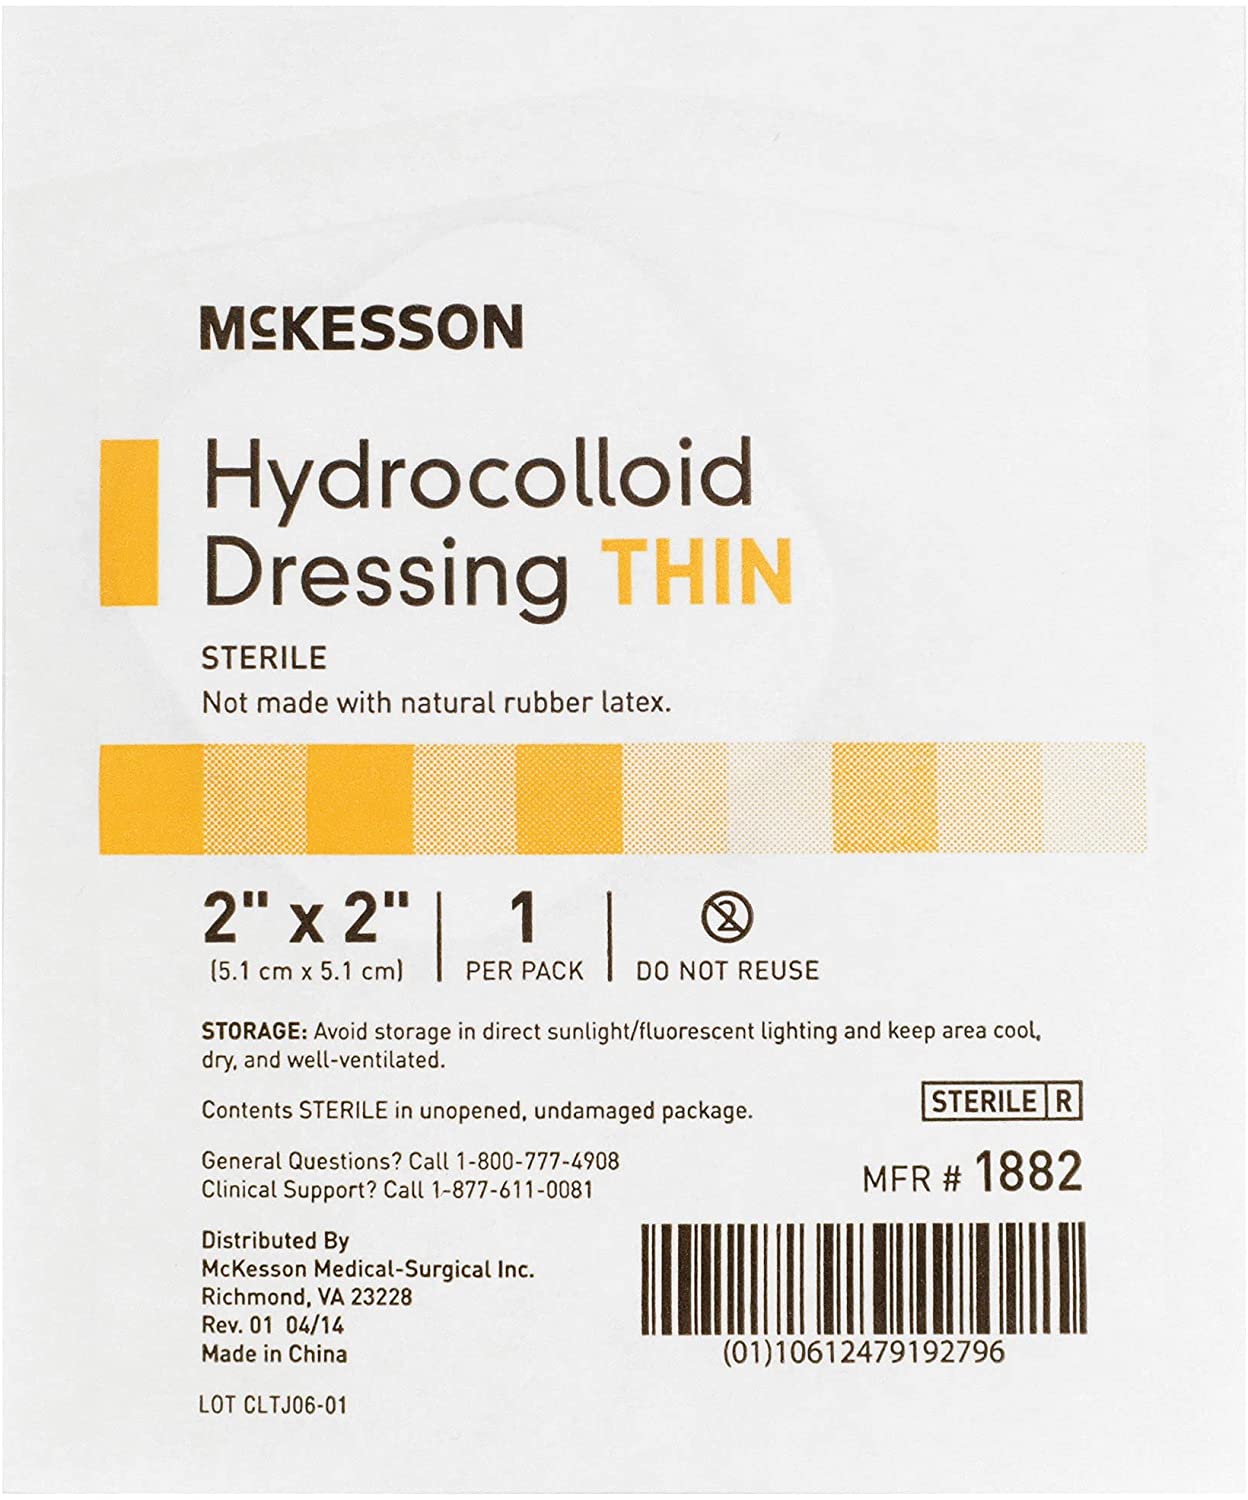 McKesson Hydrocolloid Dressing - Thin Flexible Square Pads - Senior.com Hydrocolloid Dressings